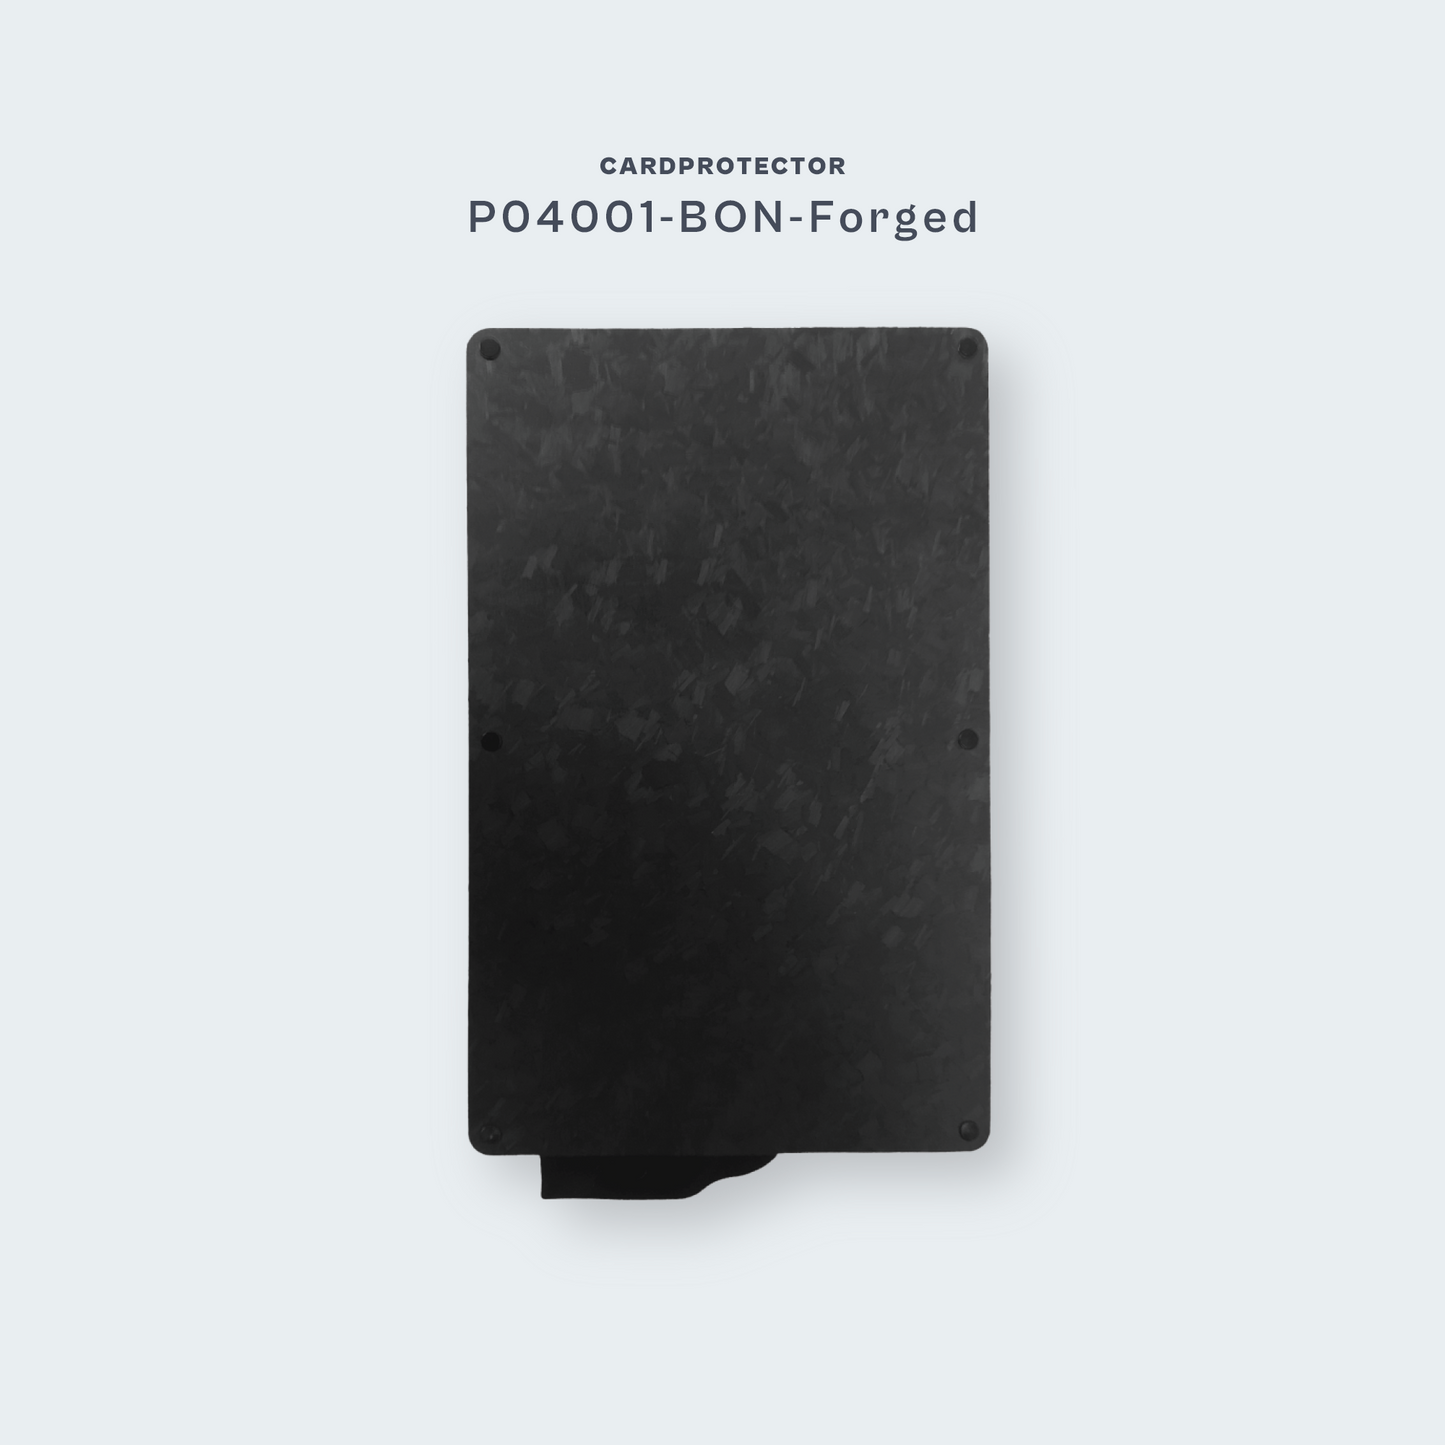 P04001-BON-Forged